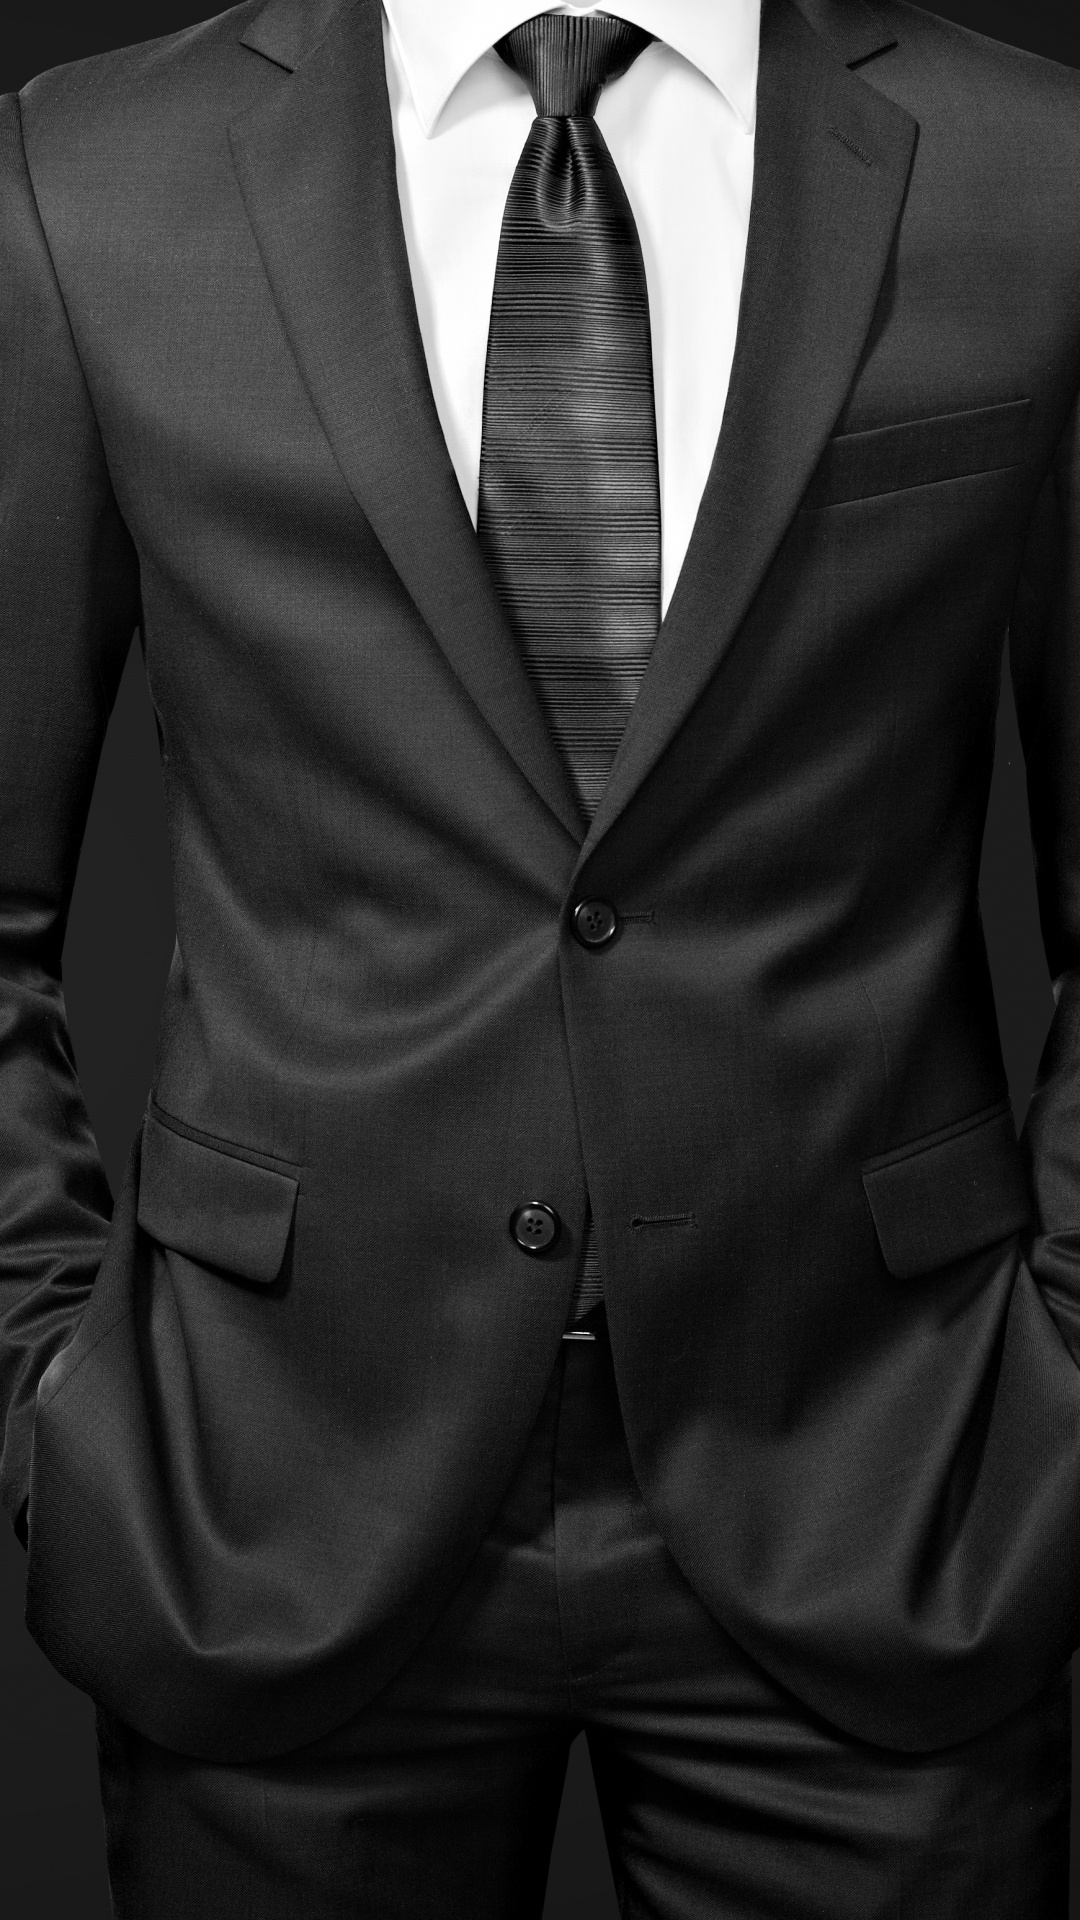 Man in Black Suit Jacket. Wallpaper in 1080x1920 Resolution